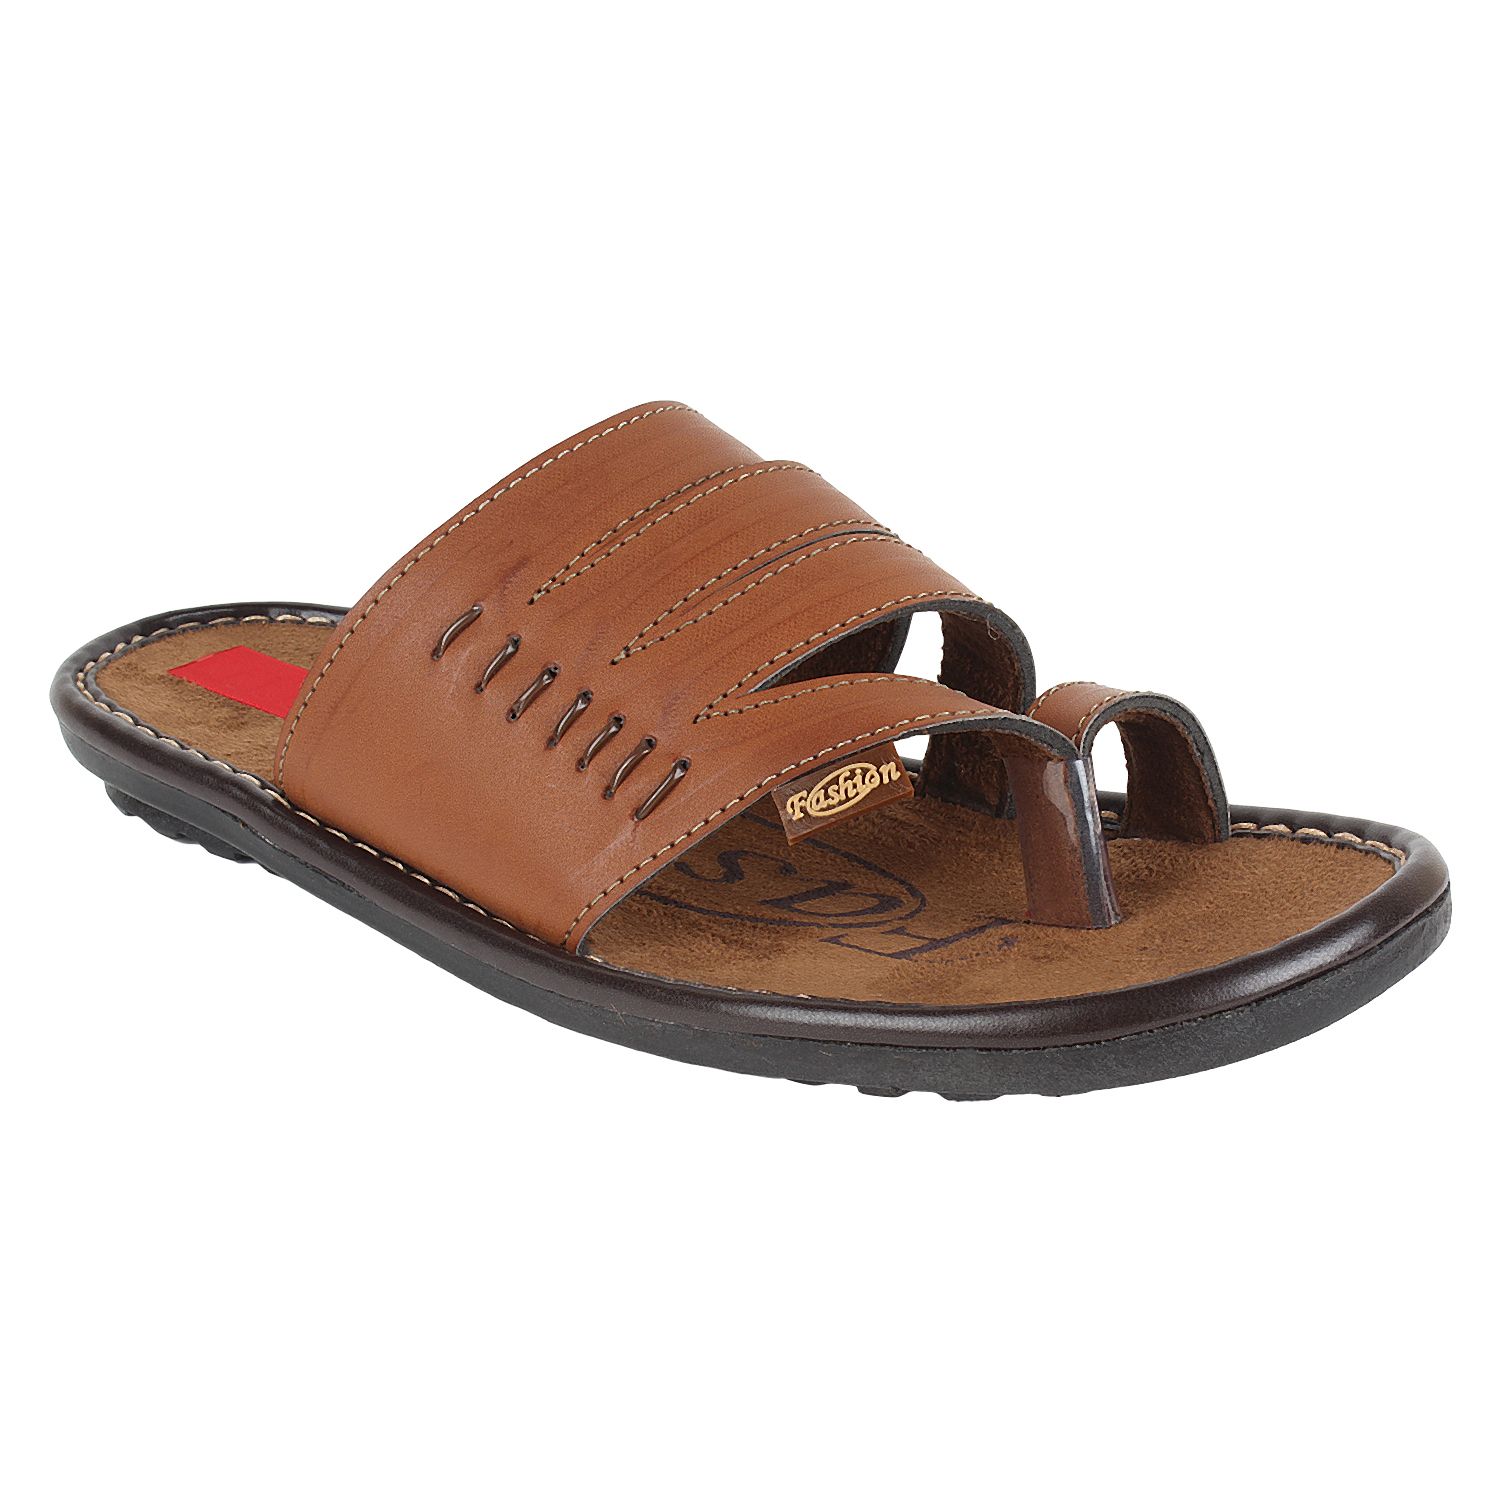 Men's Leather Sandals SN302BR